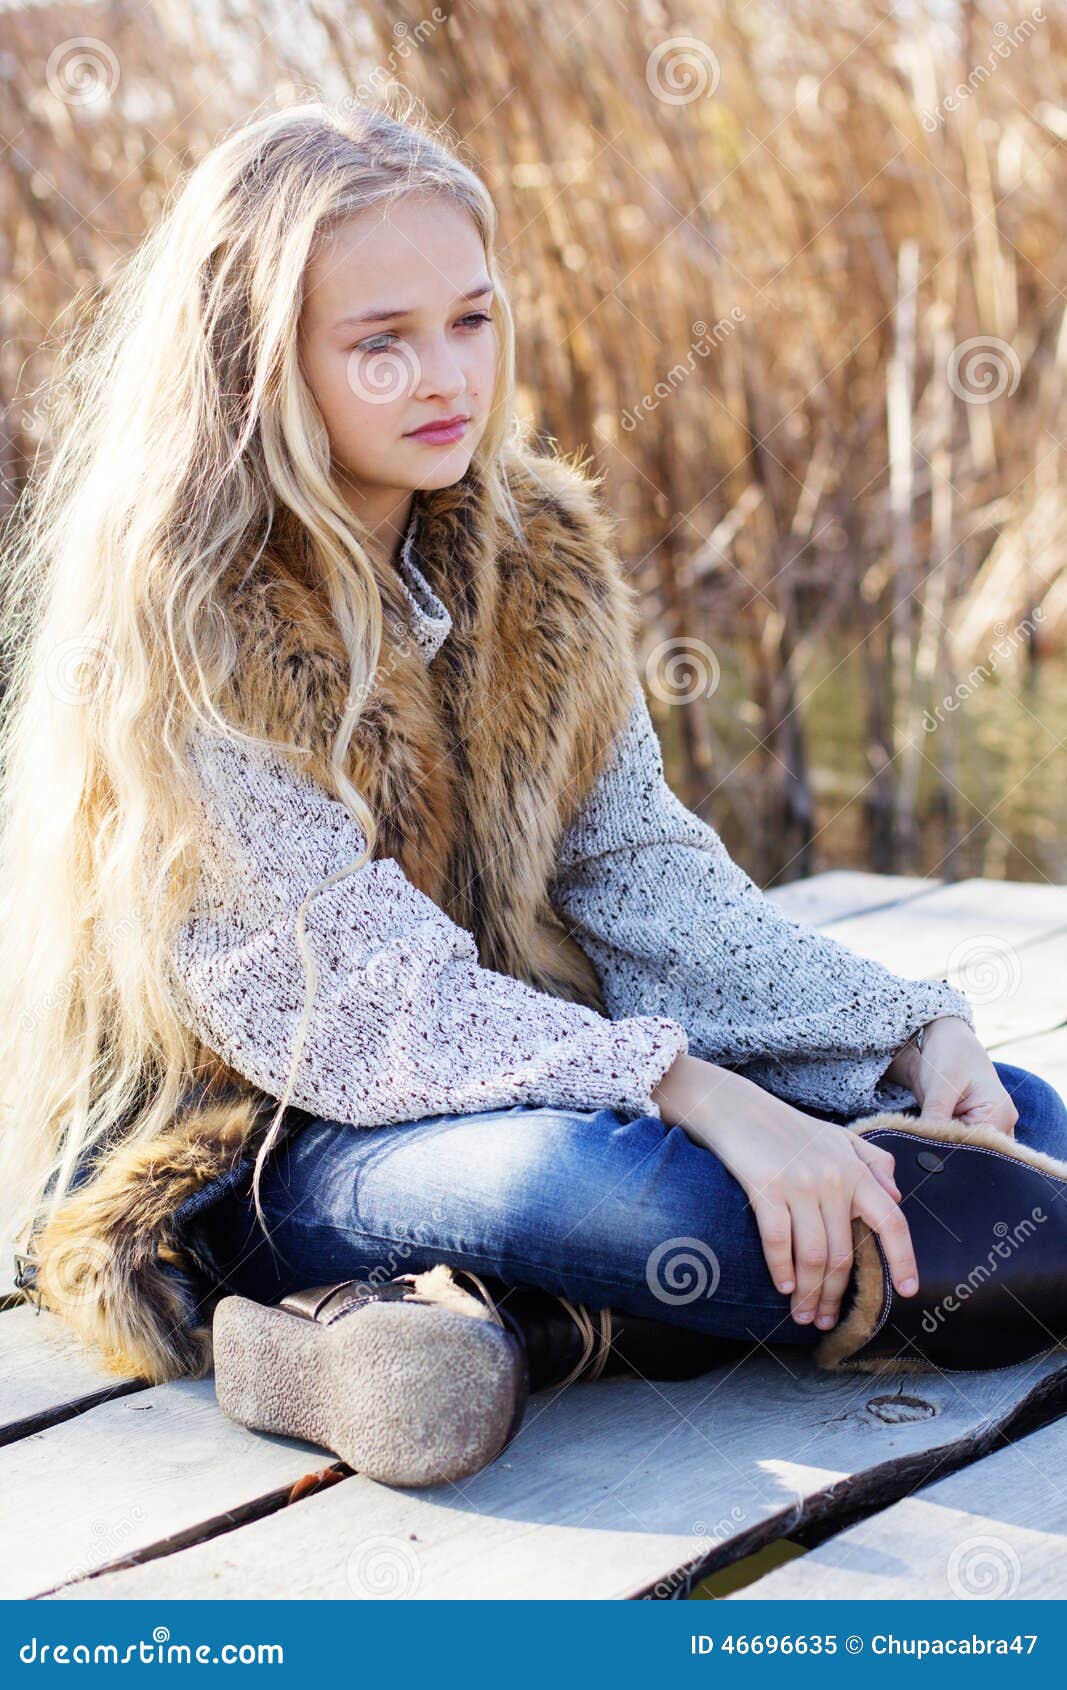 small blonde teen outdoor